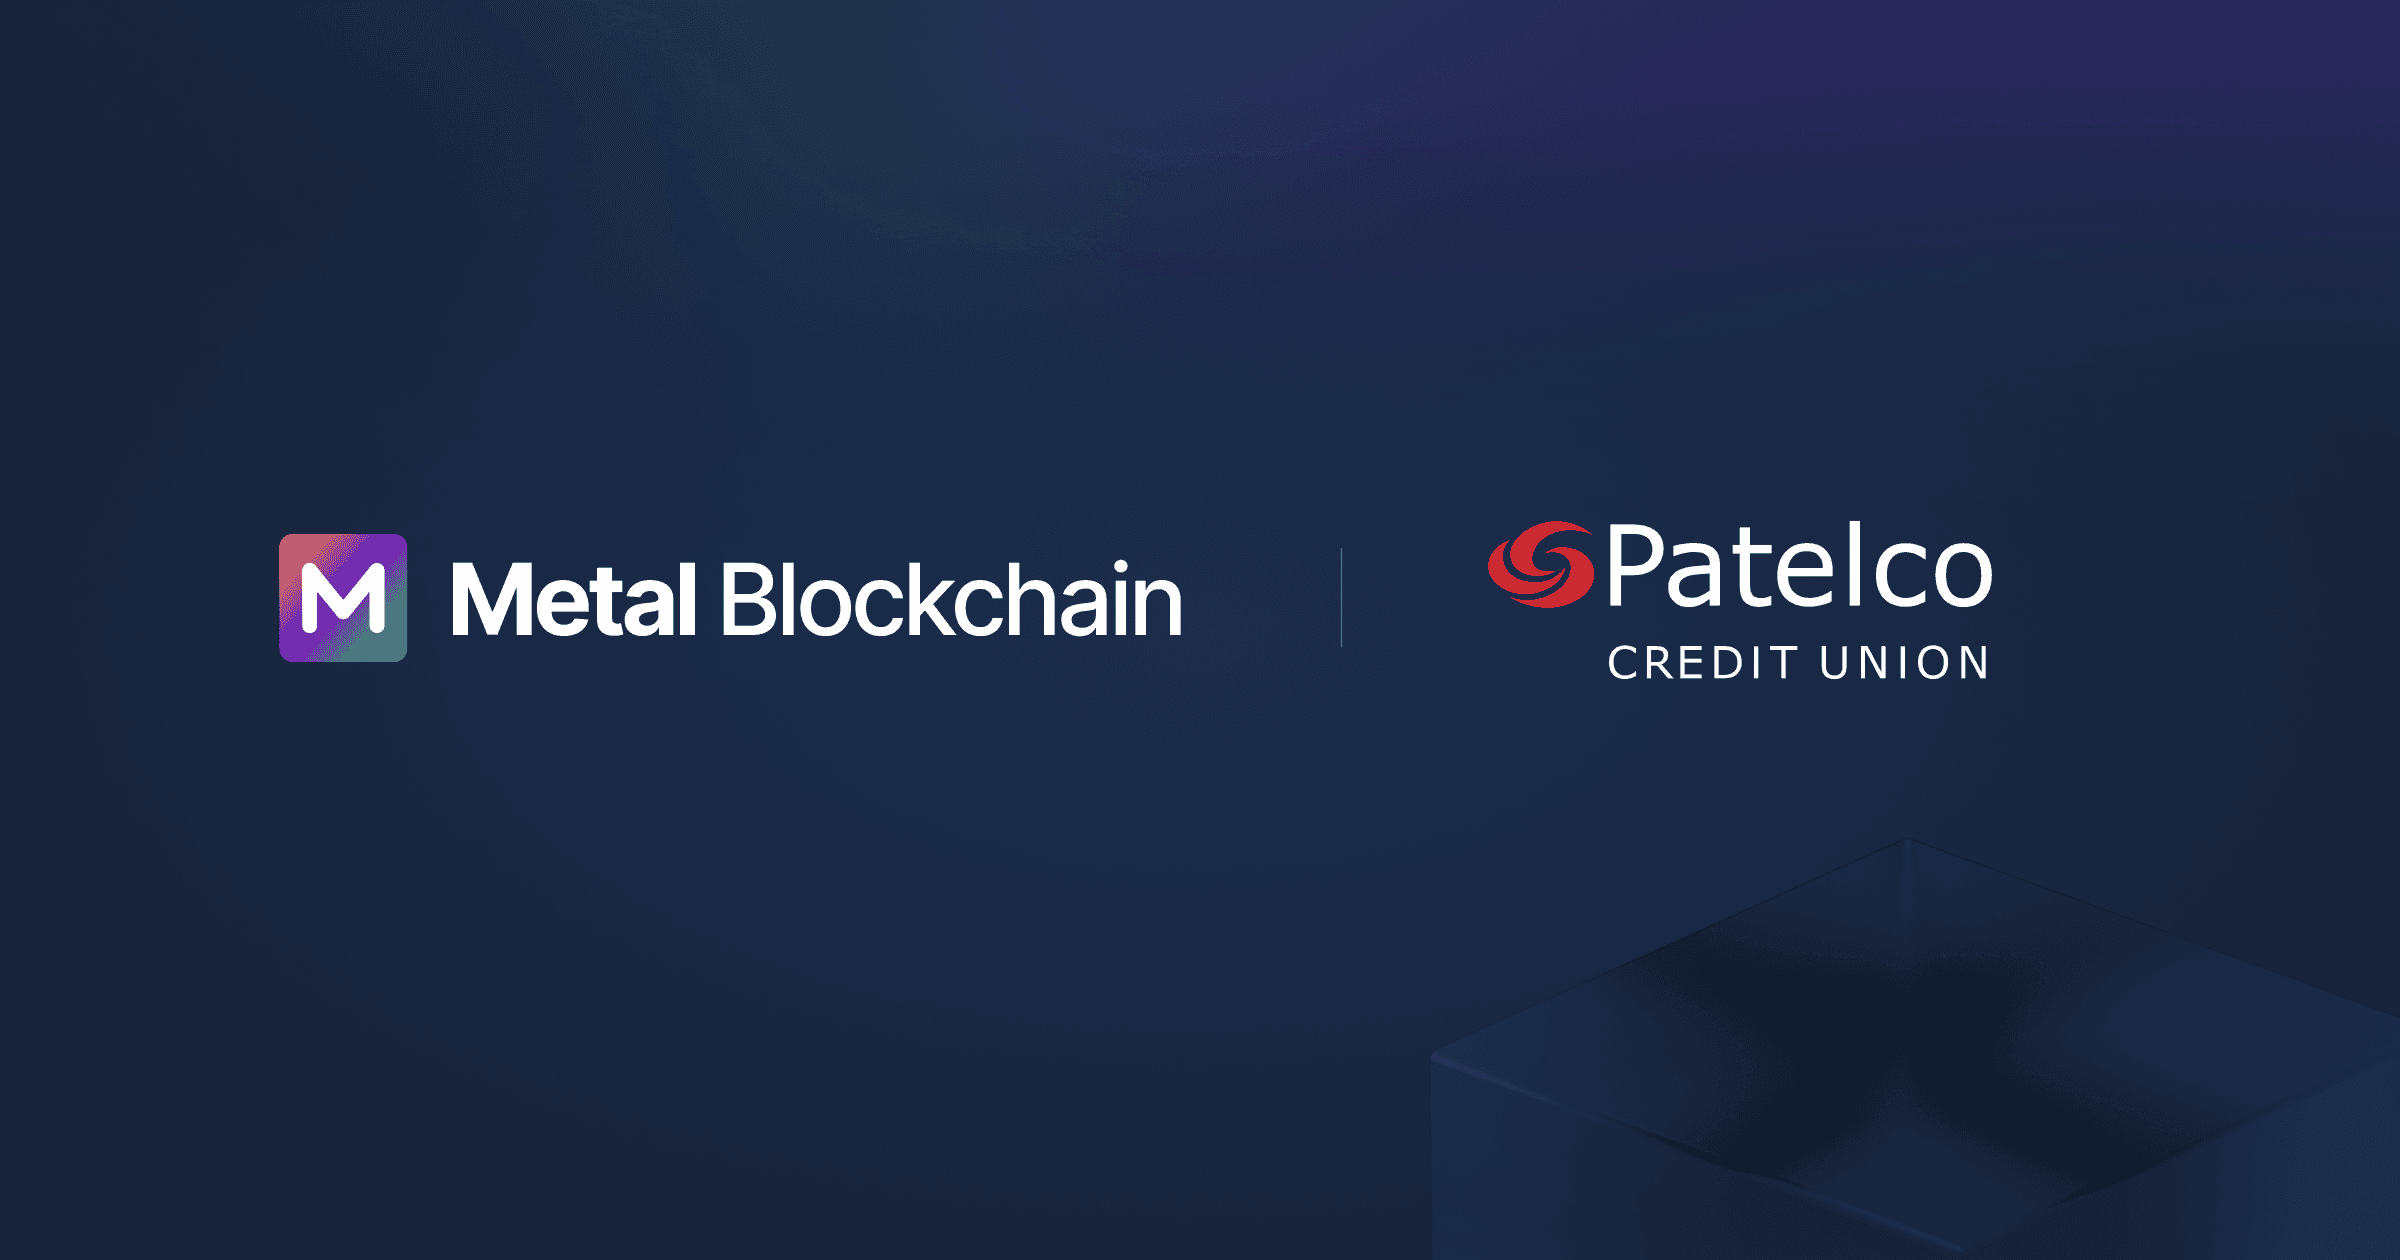 Patelco Credit Union Joins Metal Blockchain's Banking Innovation Program